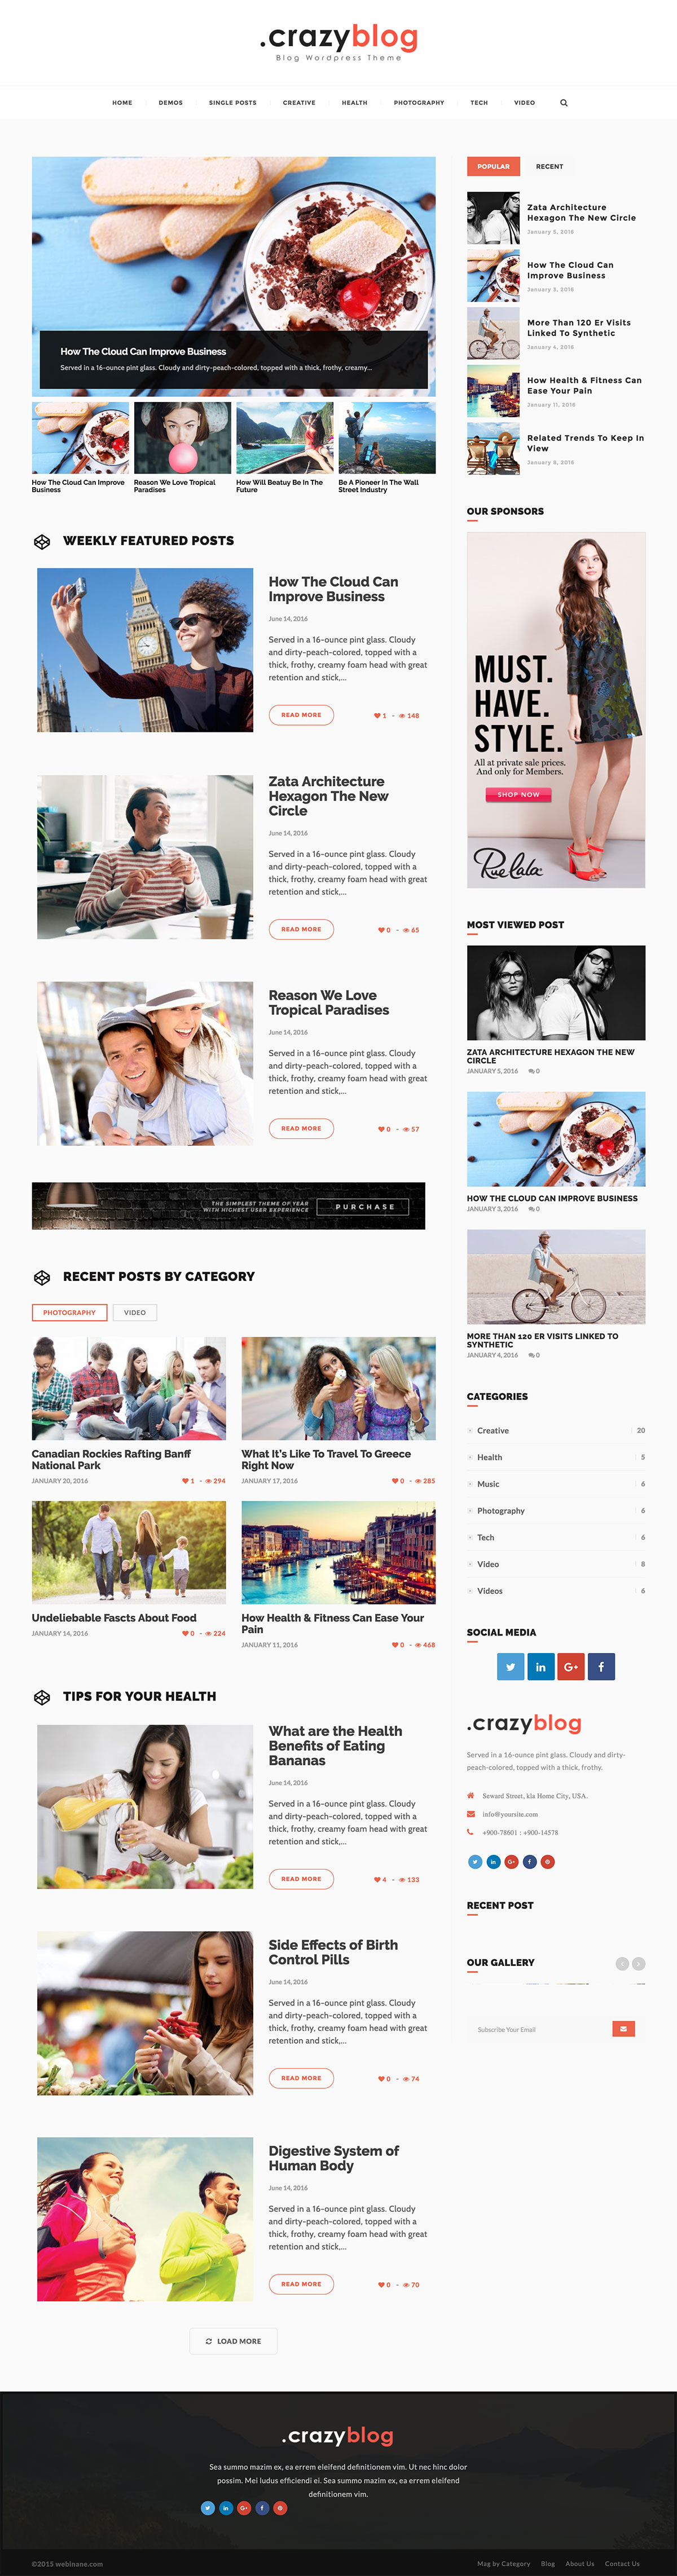 CrazyBlog - Start A Blog or Magazine for Adsense or Affiliate Business